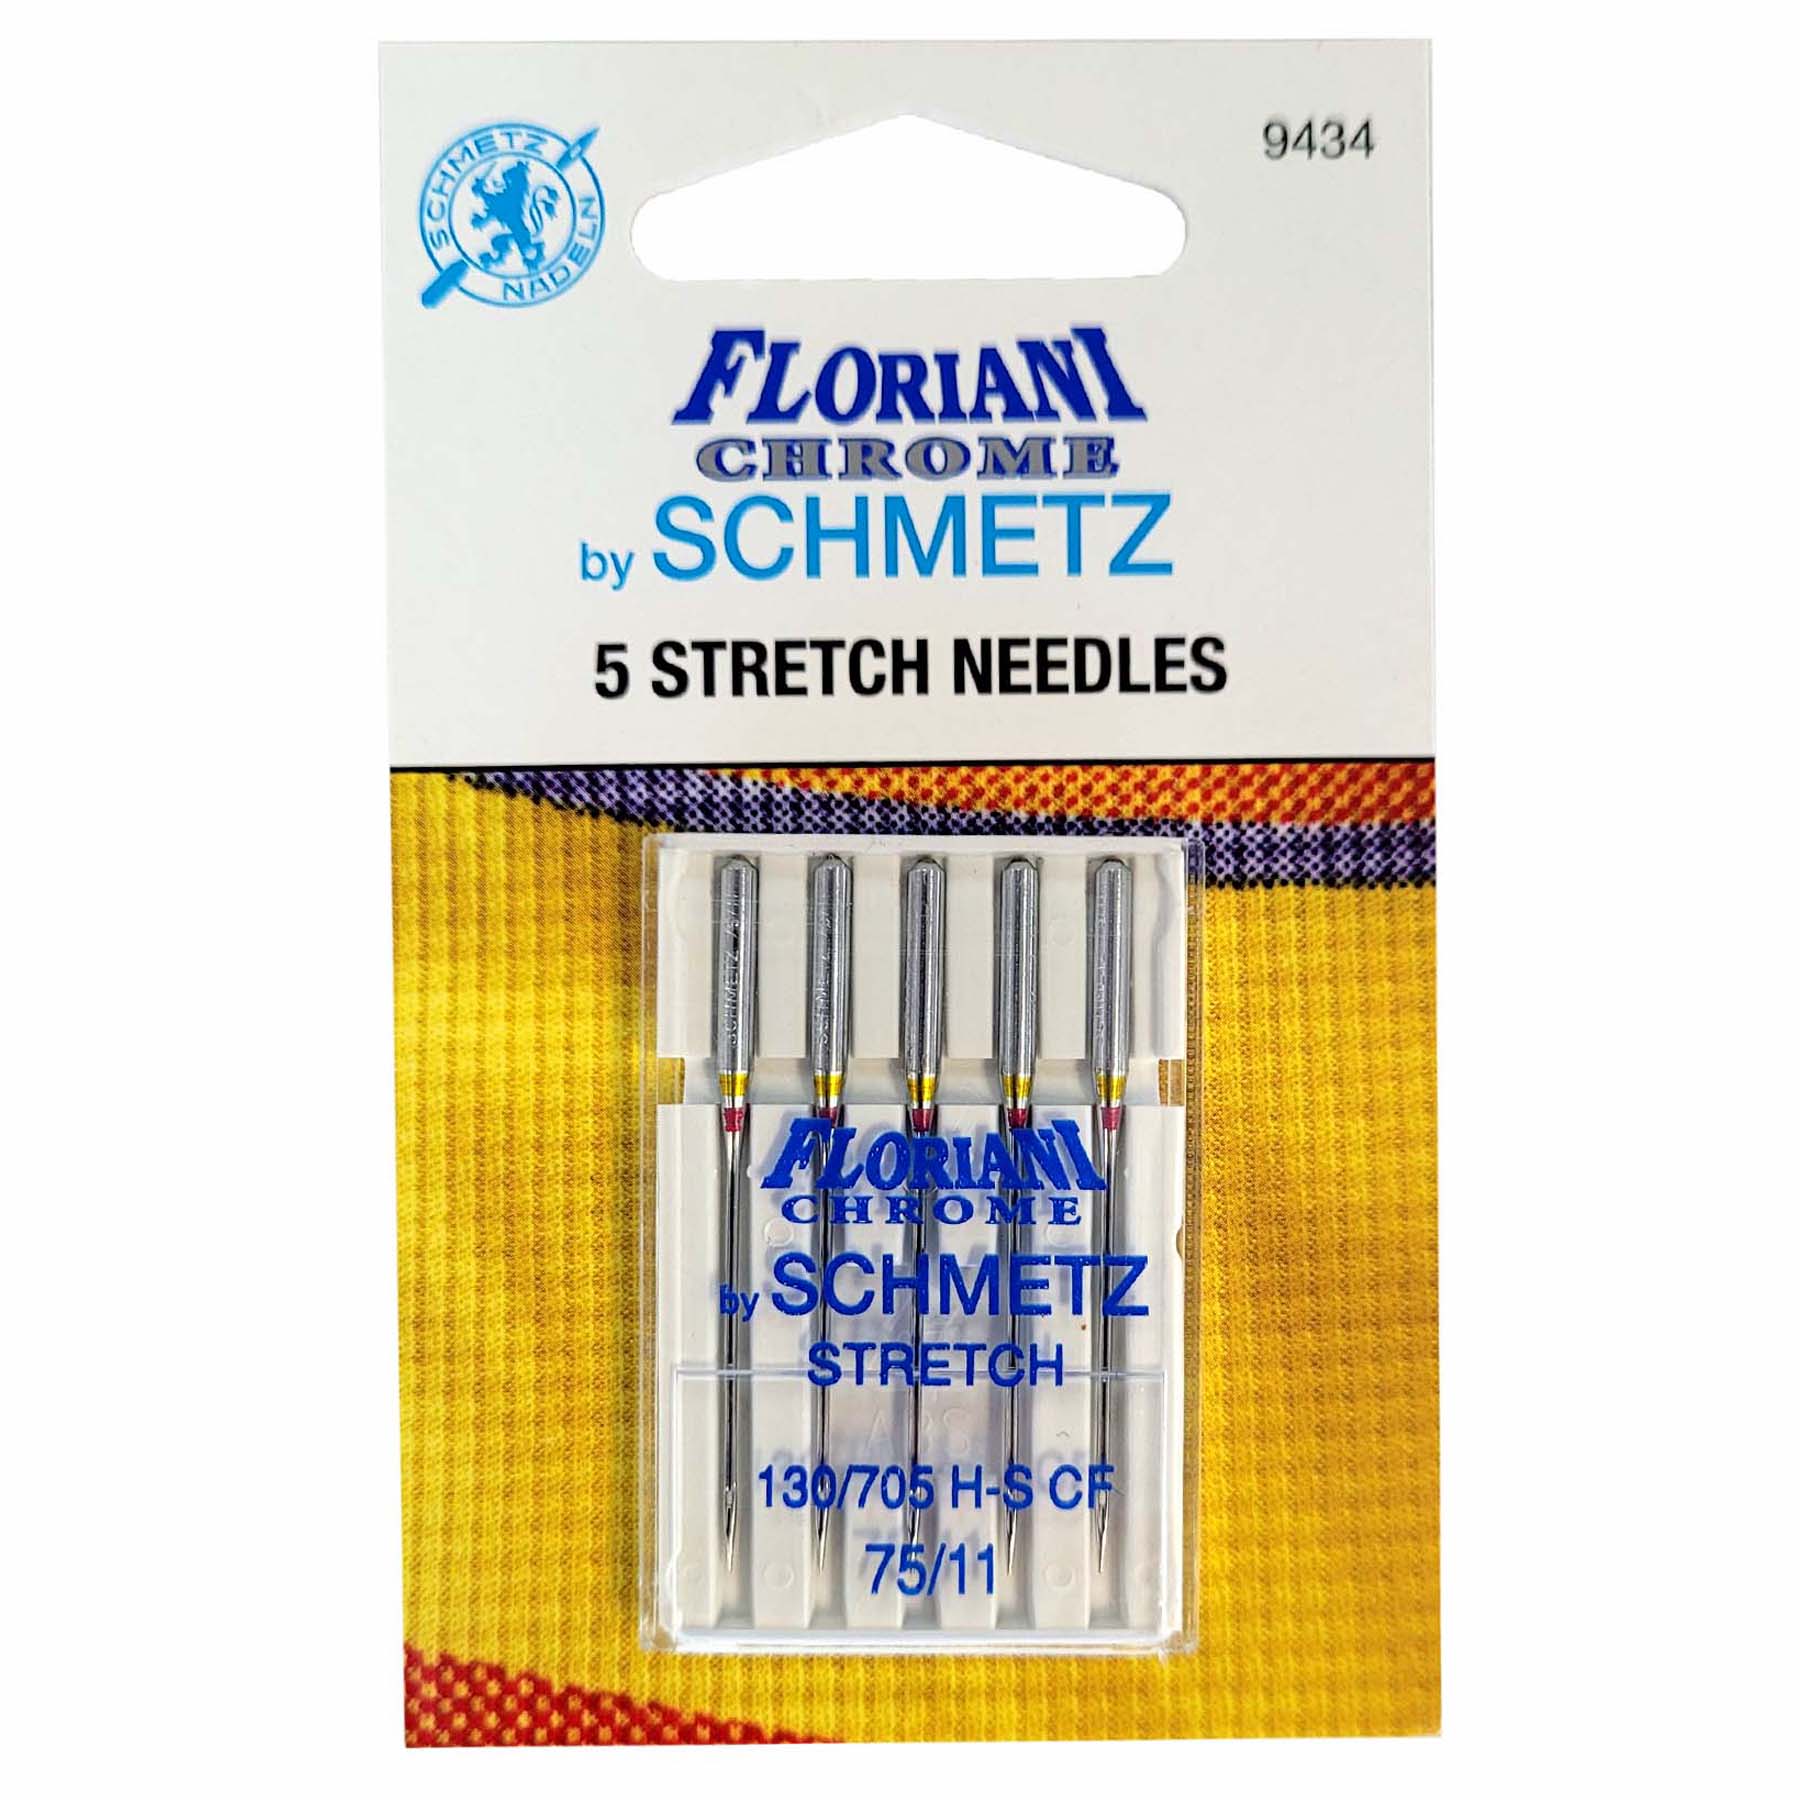 Needles, Stretch - Floriani Chrome by Schmetz 5ct